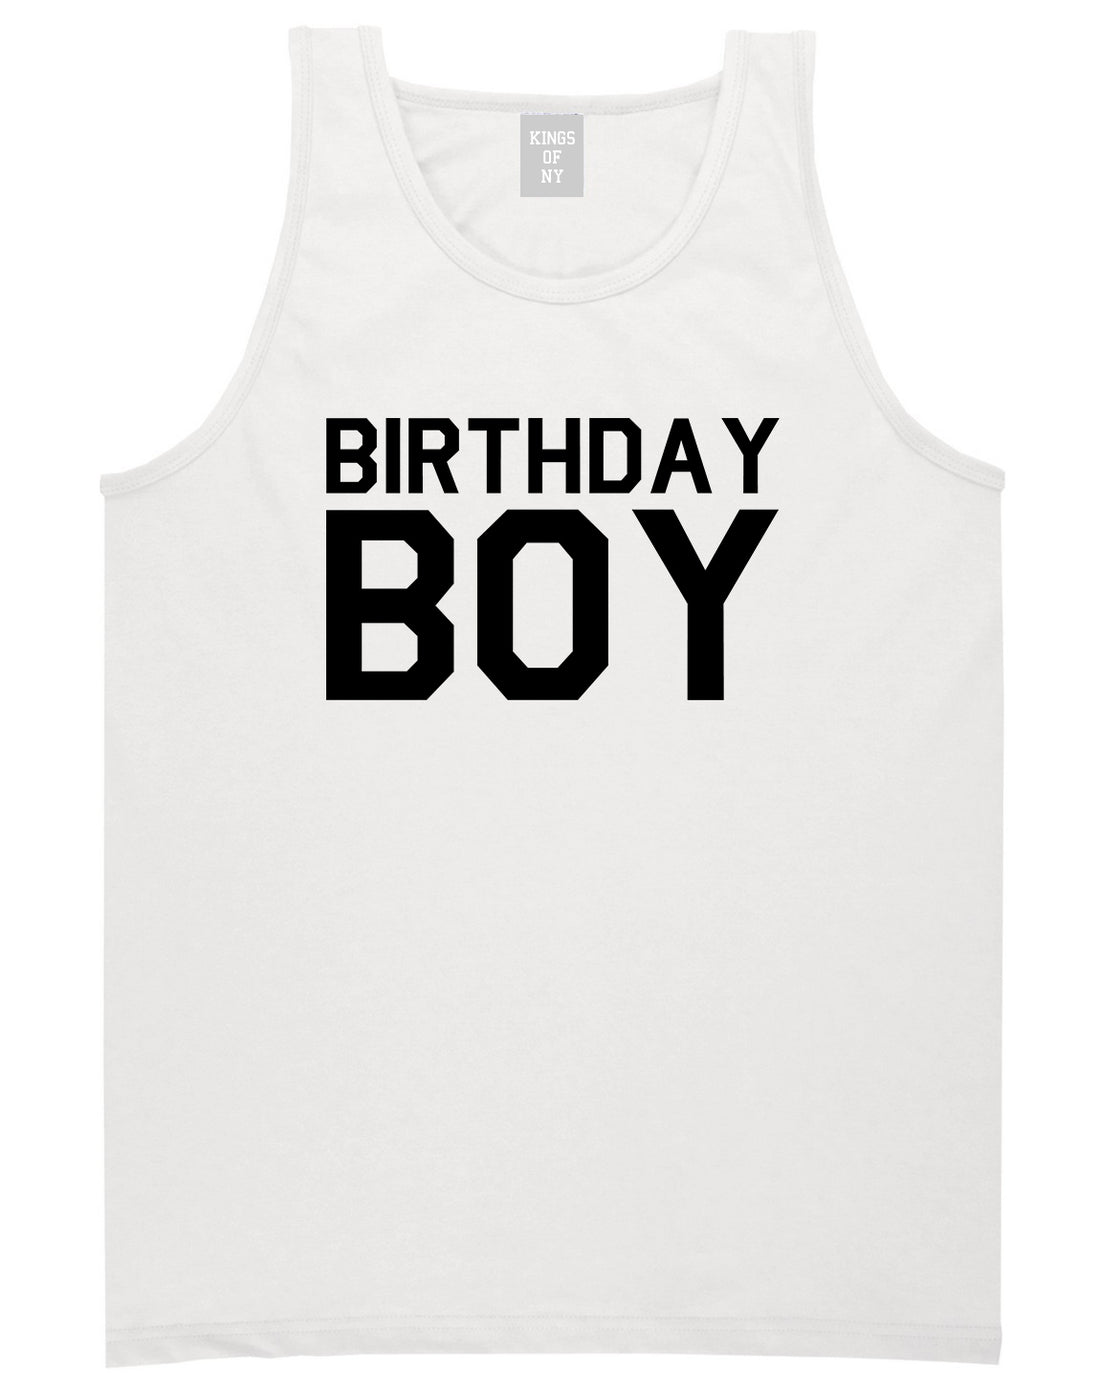 Birthday Boy White Tank Top Shirt by Kings Of NY